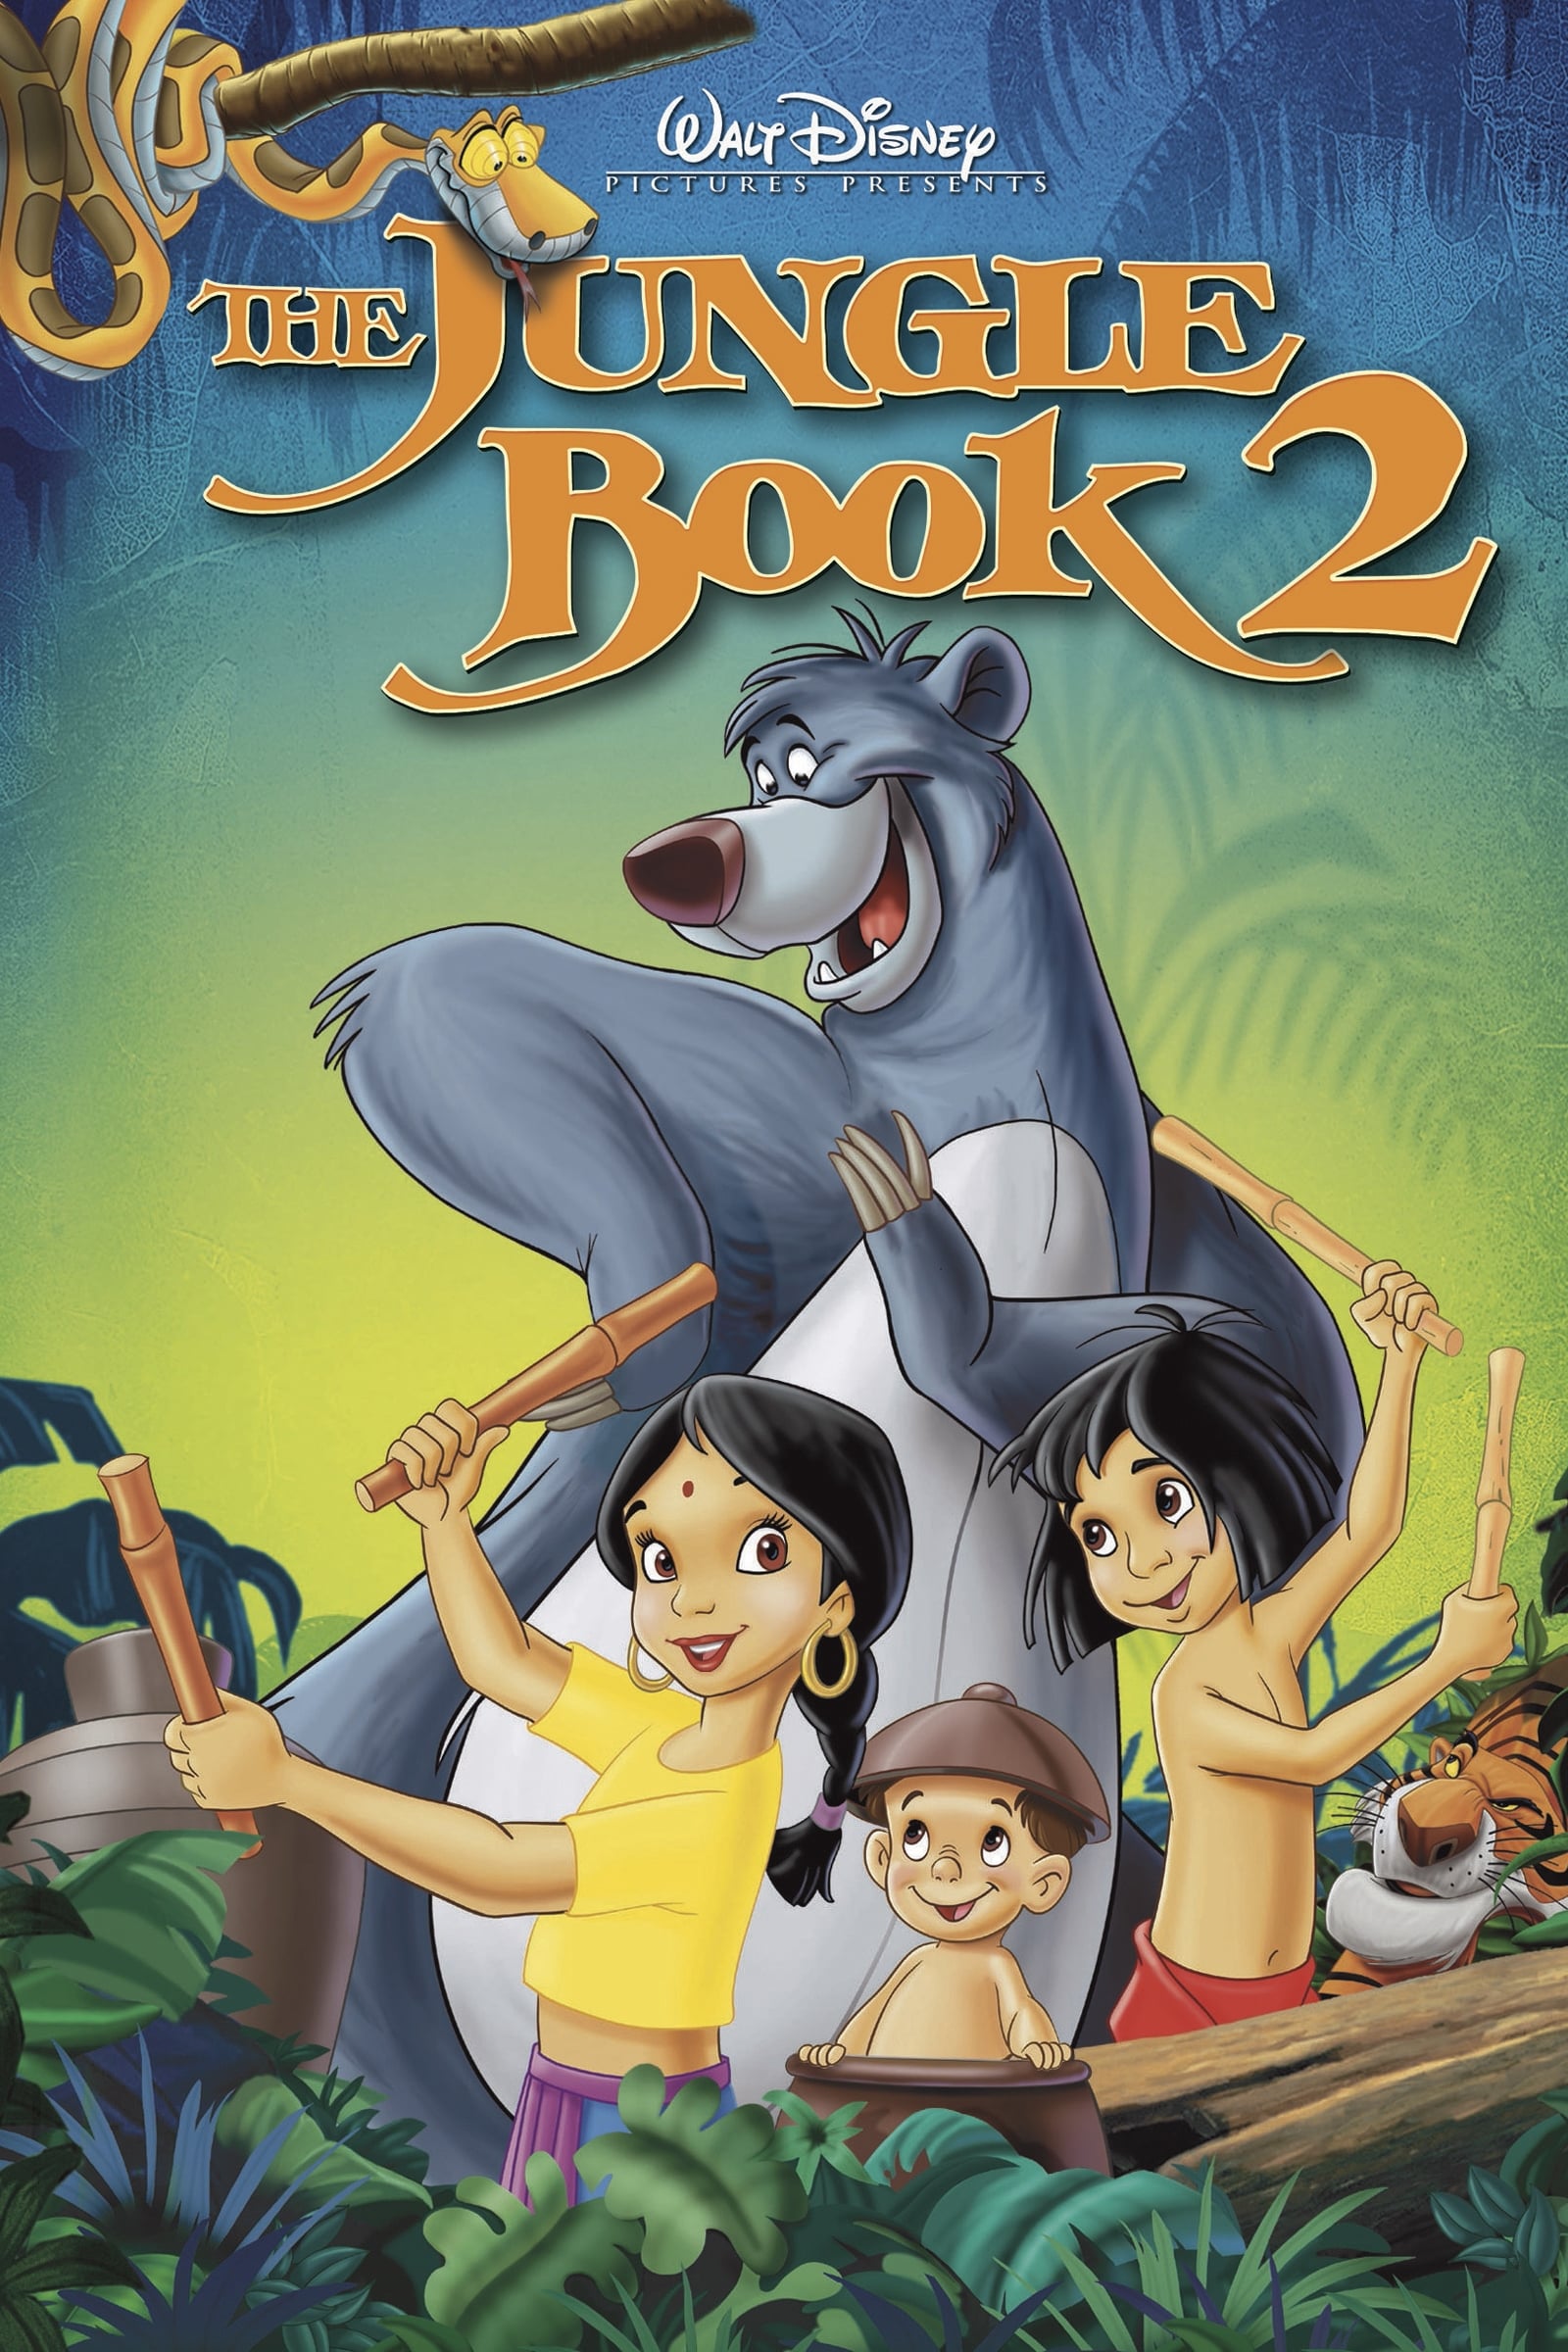 El libro de la selva 2 (2003)